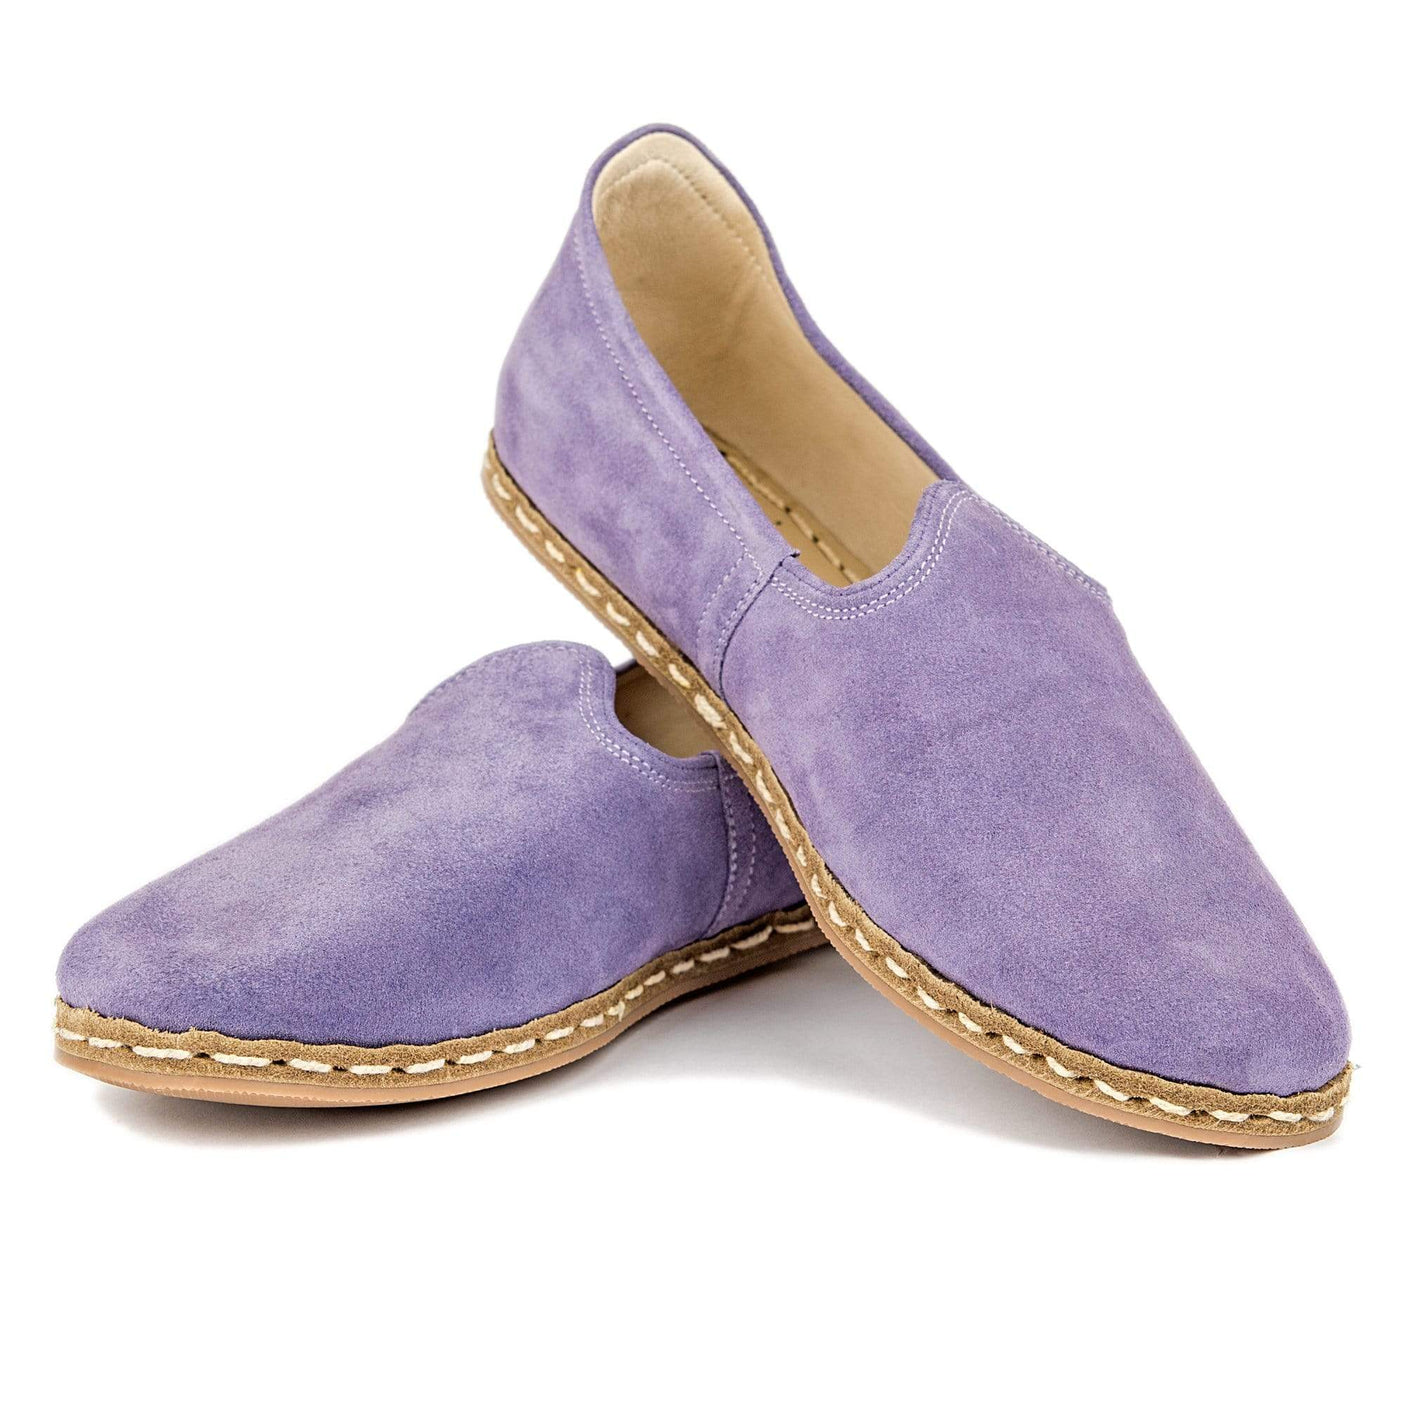 Lavender Suede - Turkish Slip-On Shoes for Women & Men : Atlantis Handmade Shoes